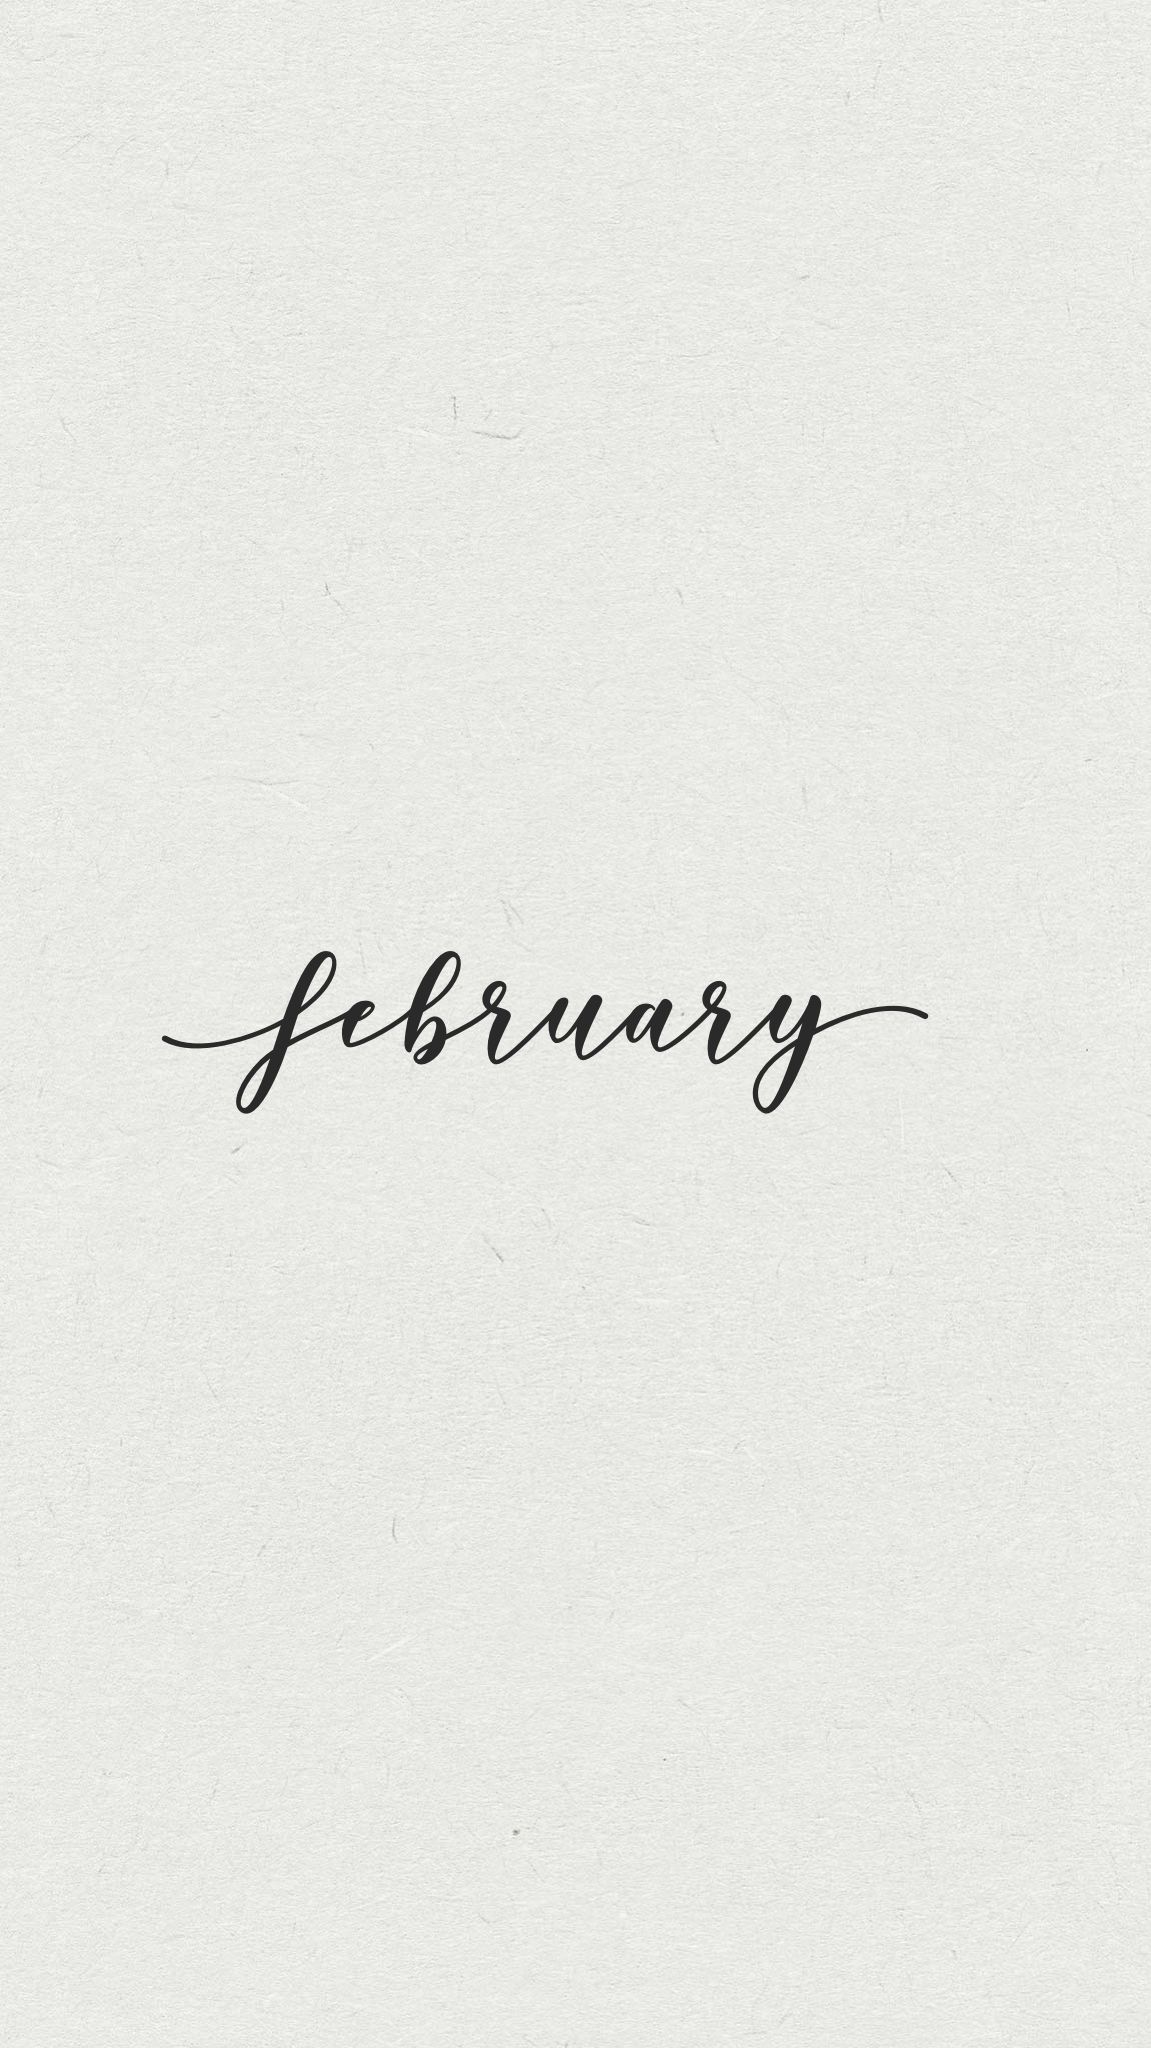 February. February wallpaper, Calligraphy wallpaper, February calligraphy